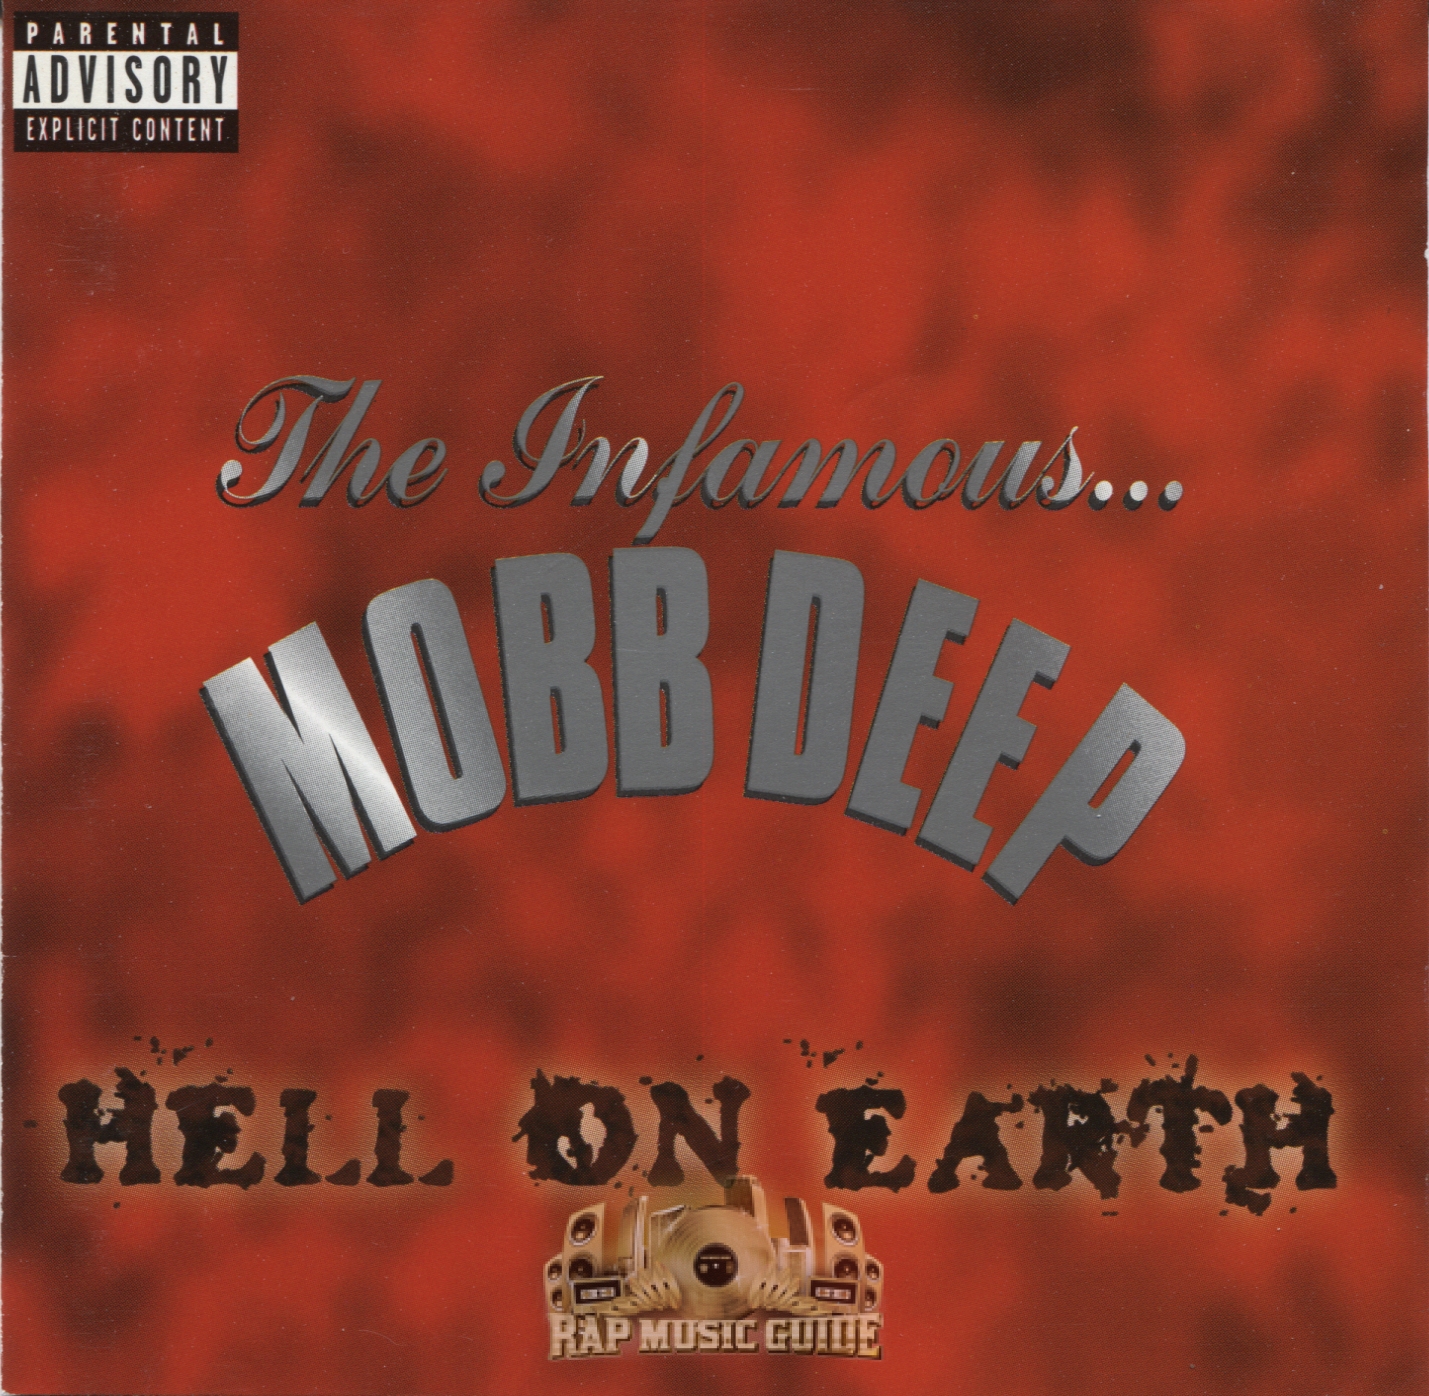 Mobb Deep - Hell On Earth: CD | Rap Music Guide